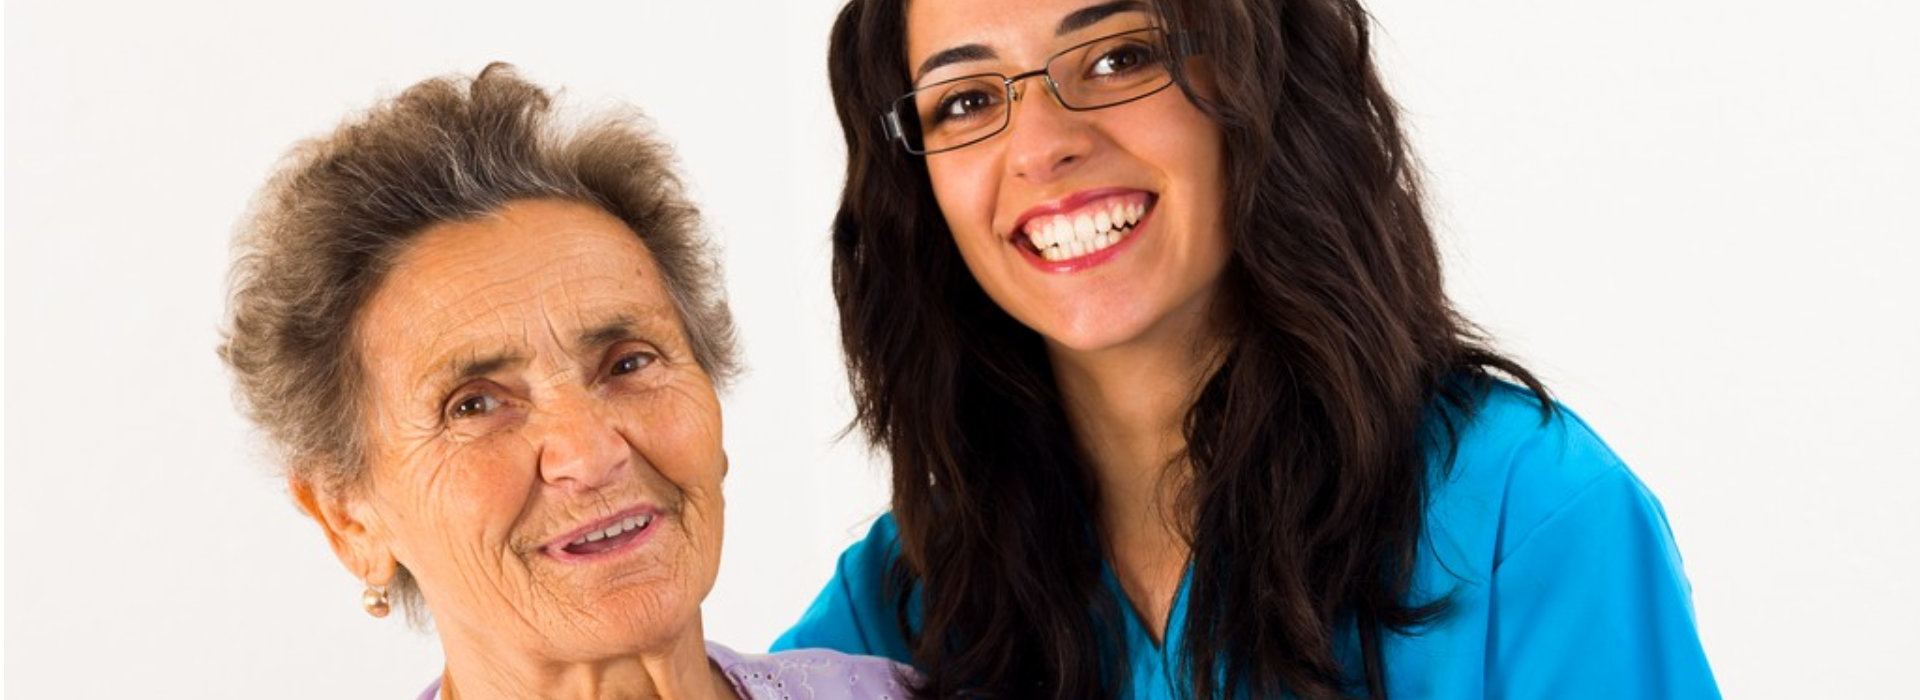 caregiver with senior citizen part 2